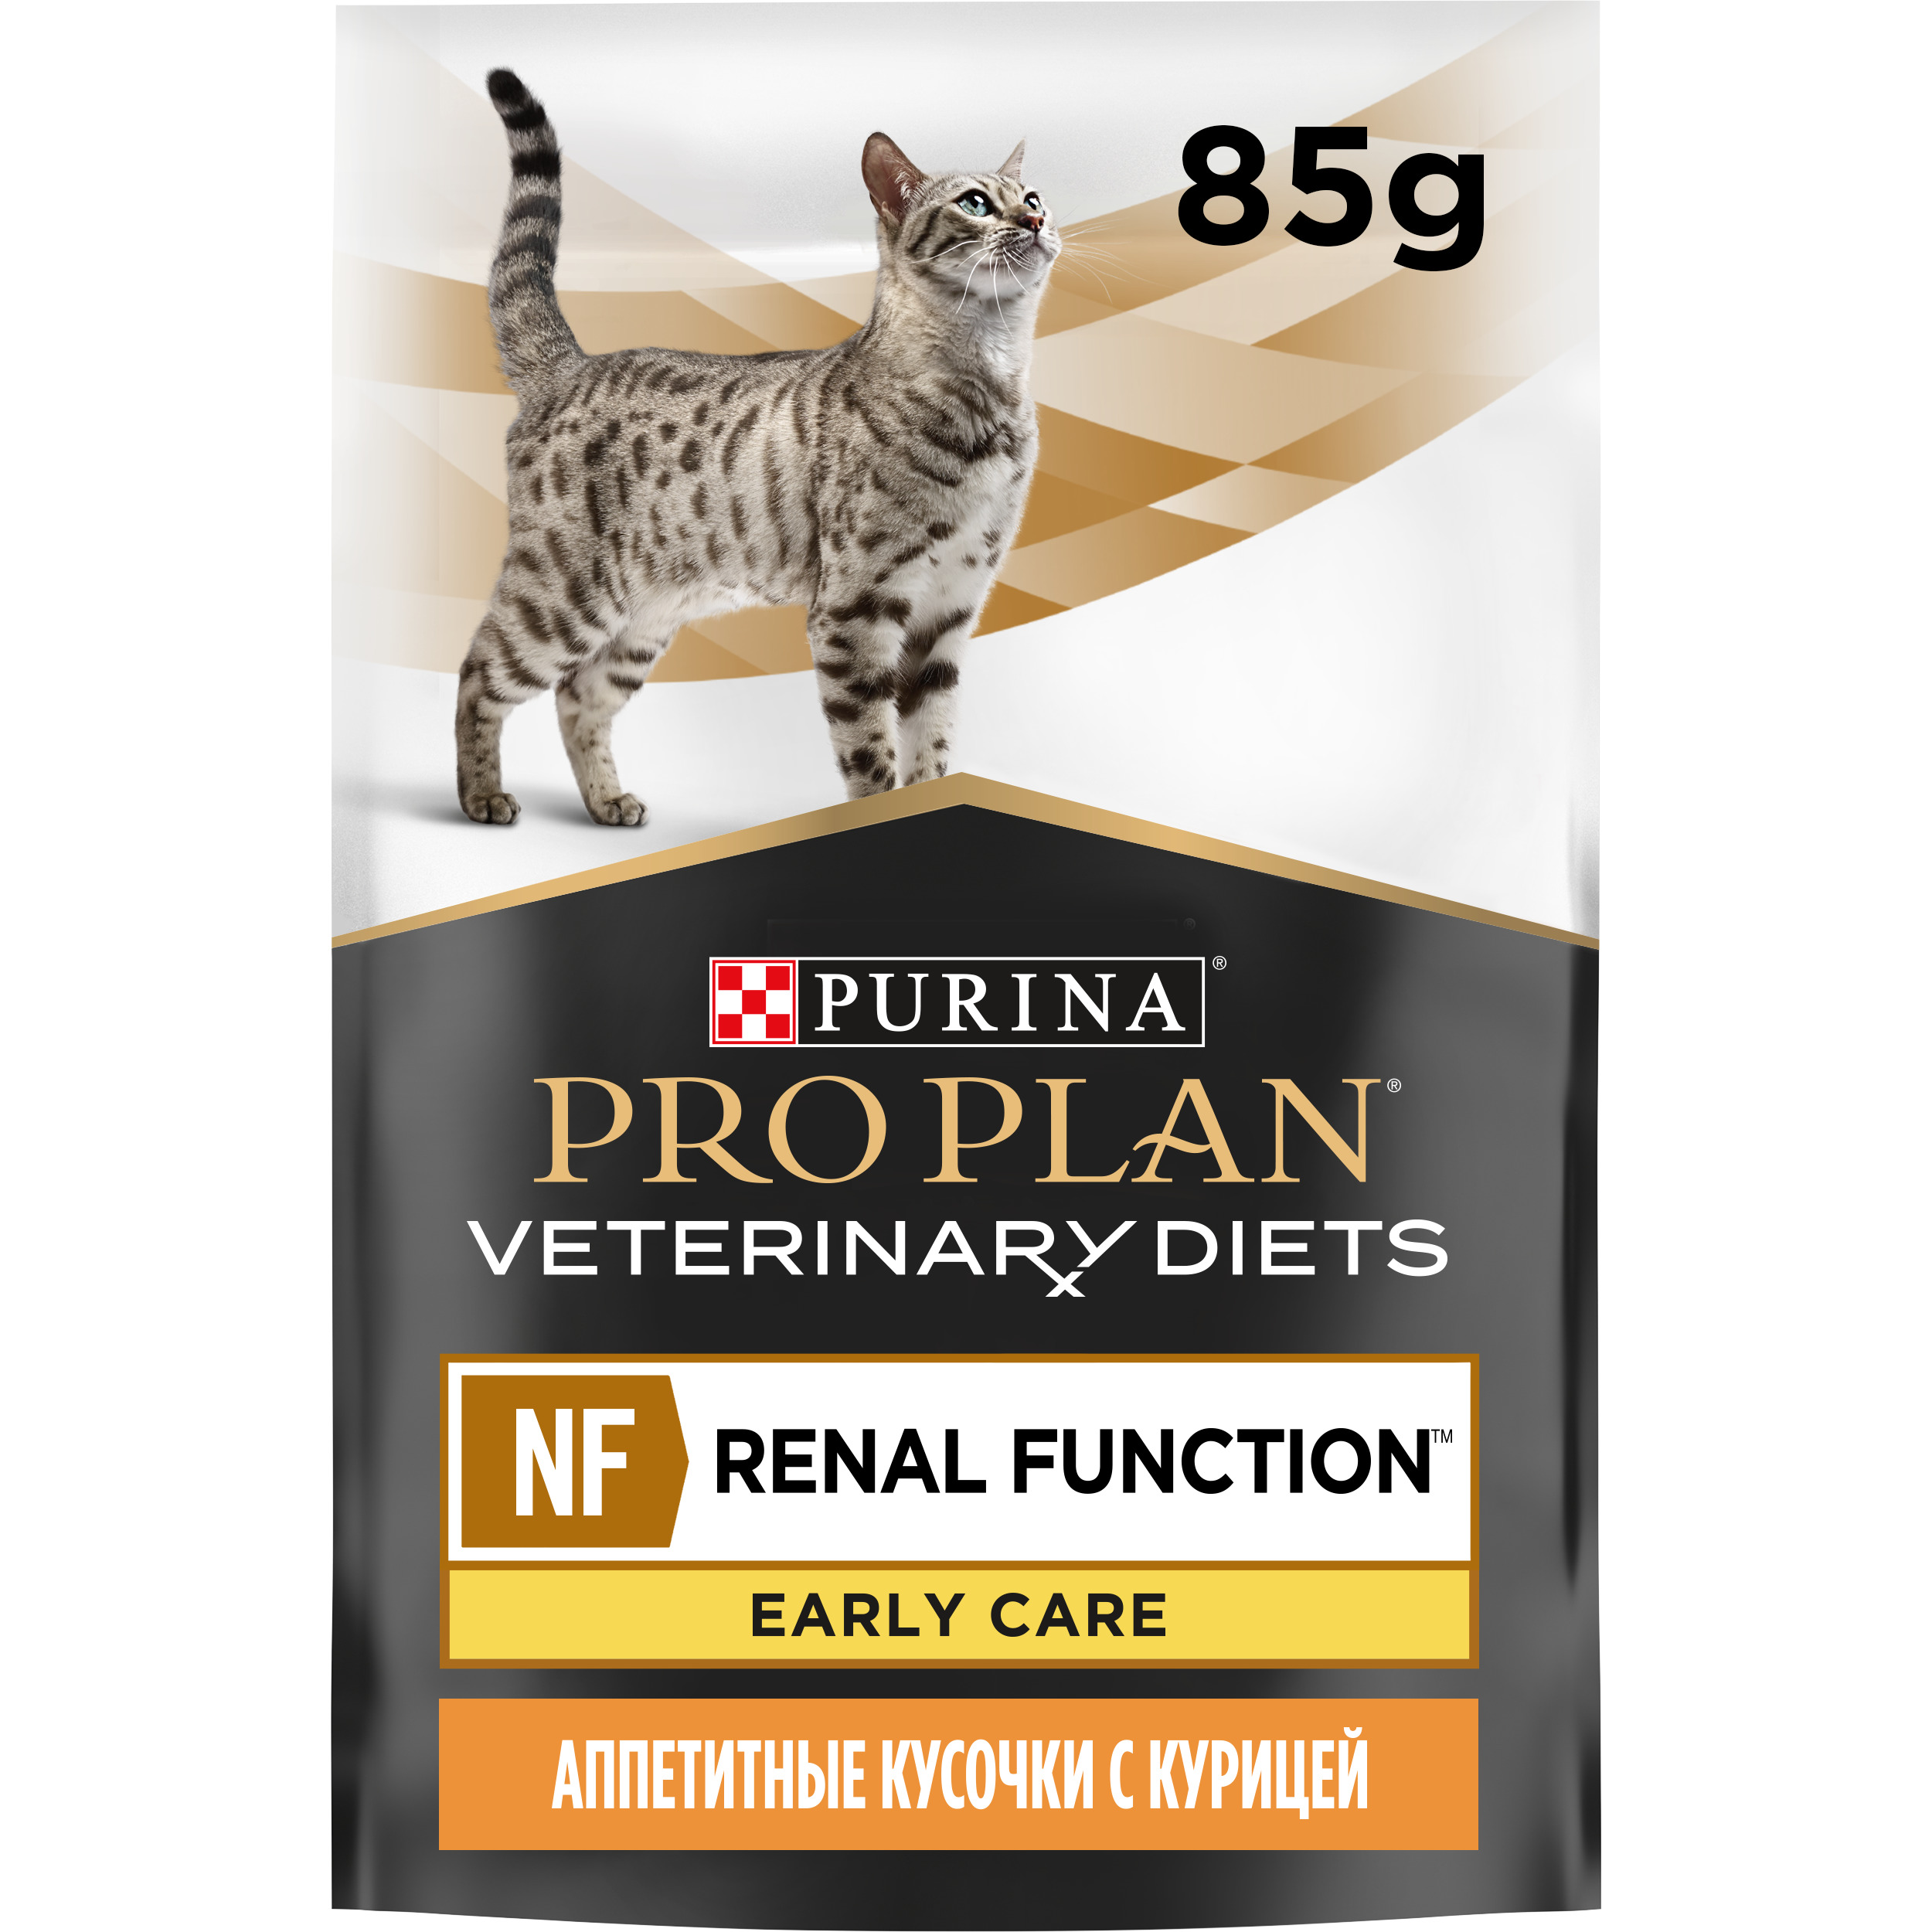 Pro plan nf renal function advanced care. Pro Plan renal early Care. Purina Pro Plan renal function для кошек. 2 Сухой корм для кошек Pro Plan (NF) renal function. Pro Plan Veterinary Diets renal function для кошек.